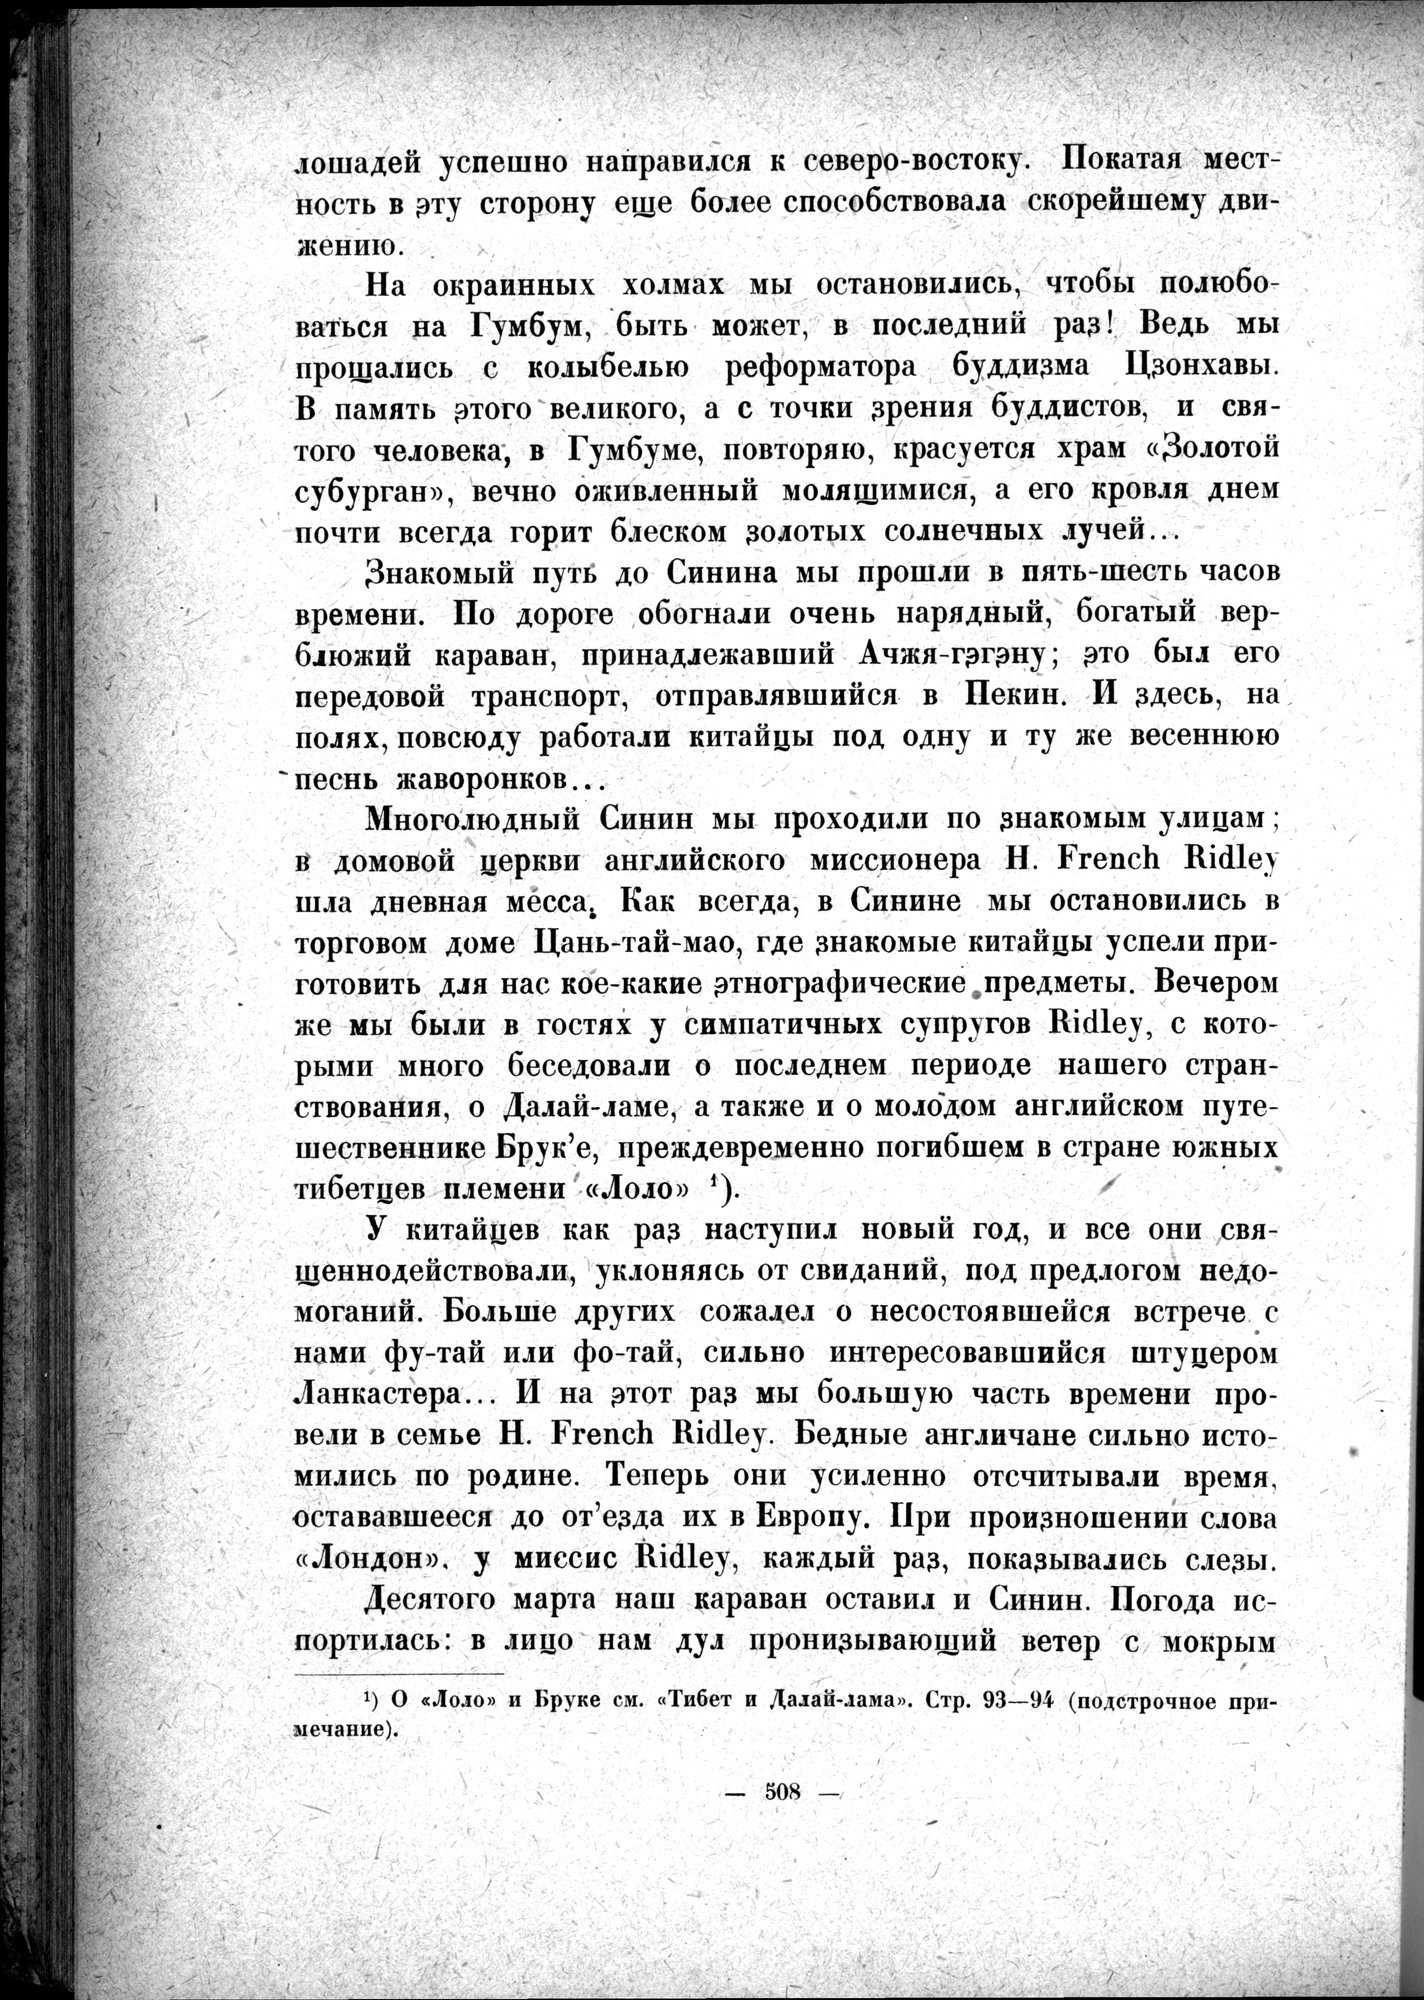 Mongoliya i Amdo i mertby gorod Khara-Khoto : vol.1 / Page 584 (Grayscale High Resolution Image)